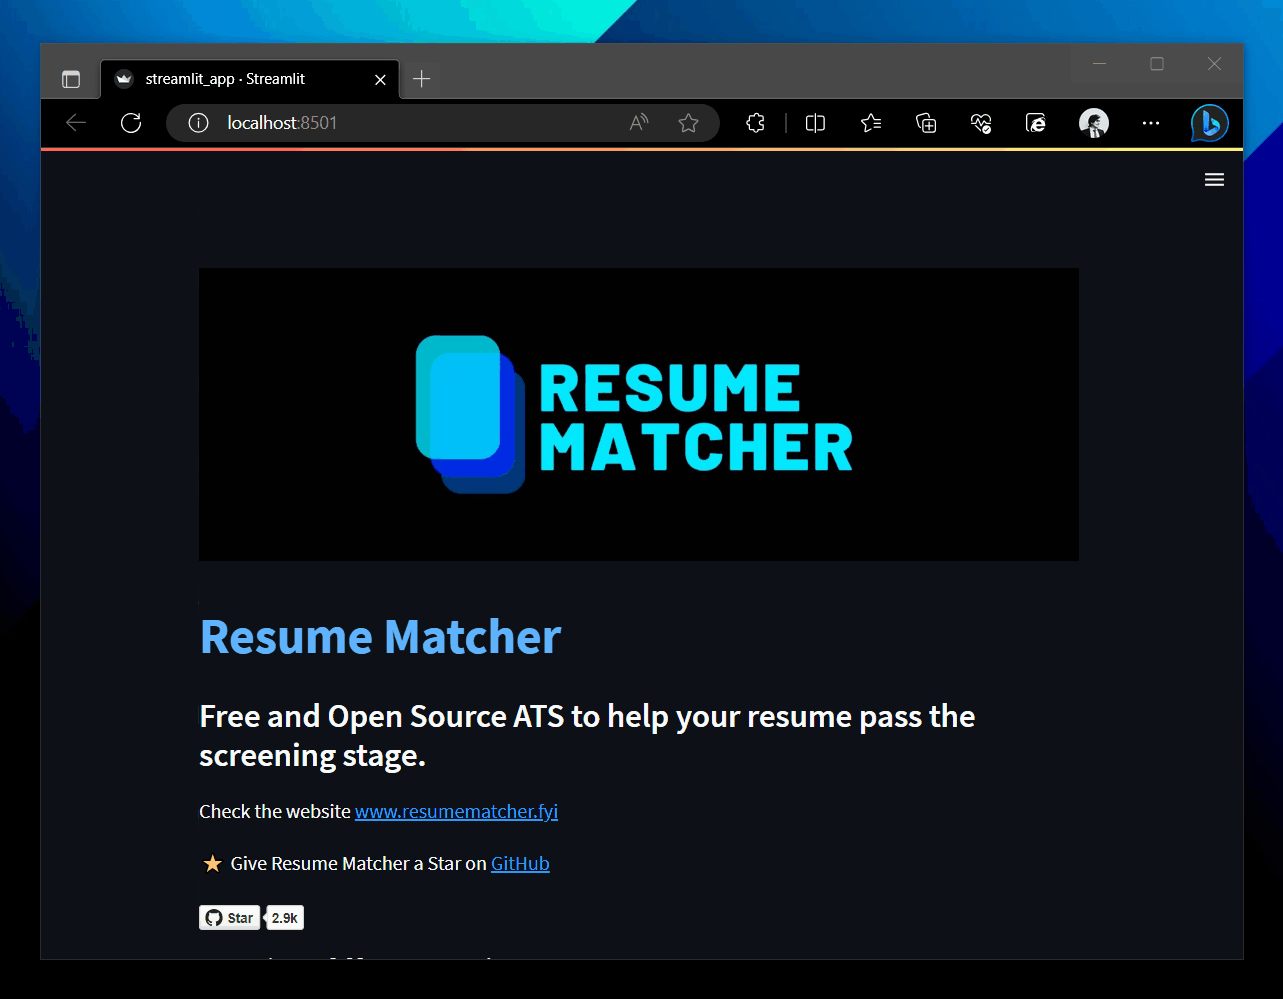 Resume_Matcher_streamlit_demo